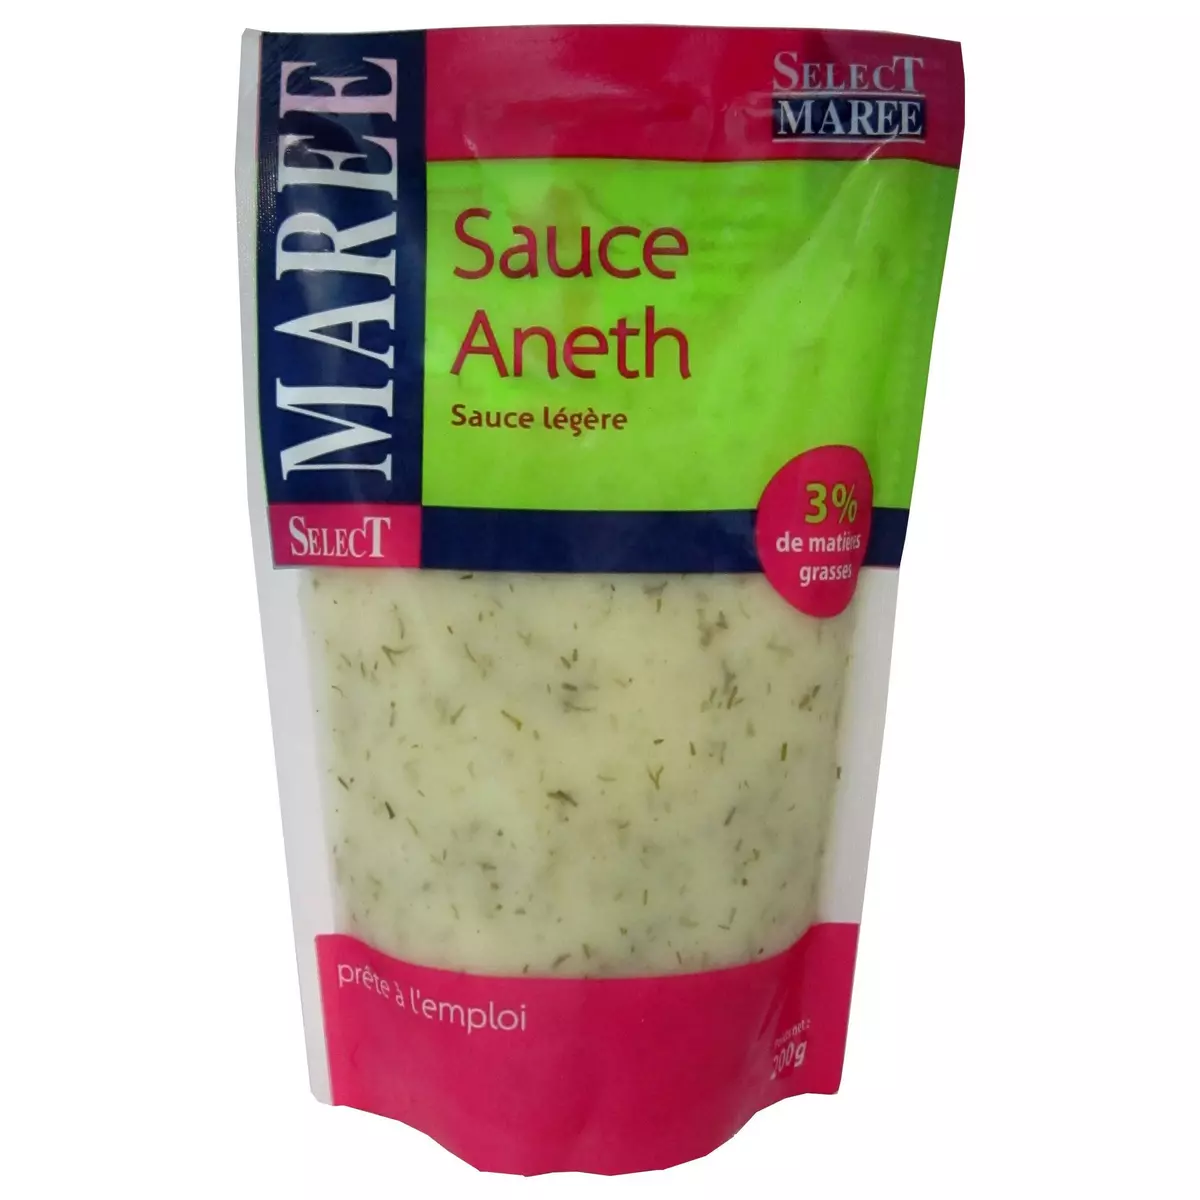 SELECT MAREE Sauce aneth 200g